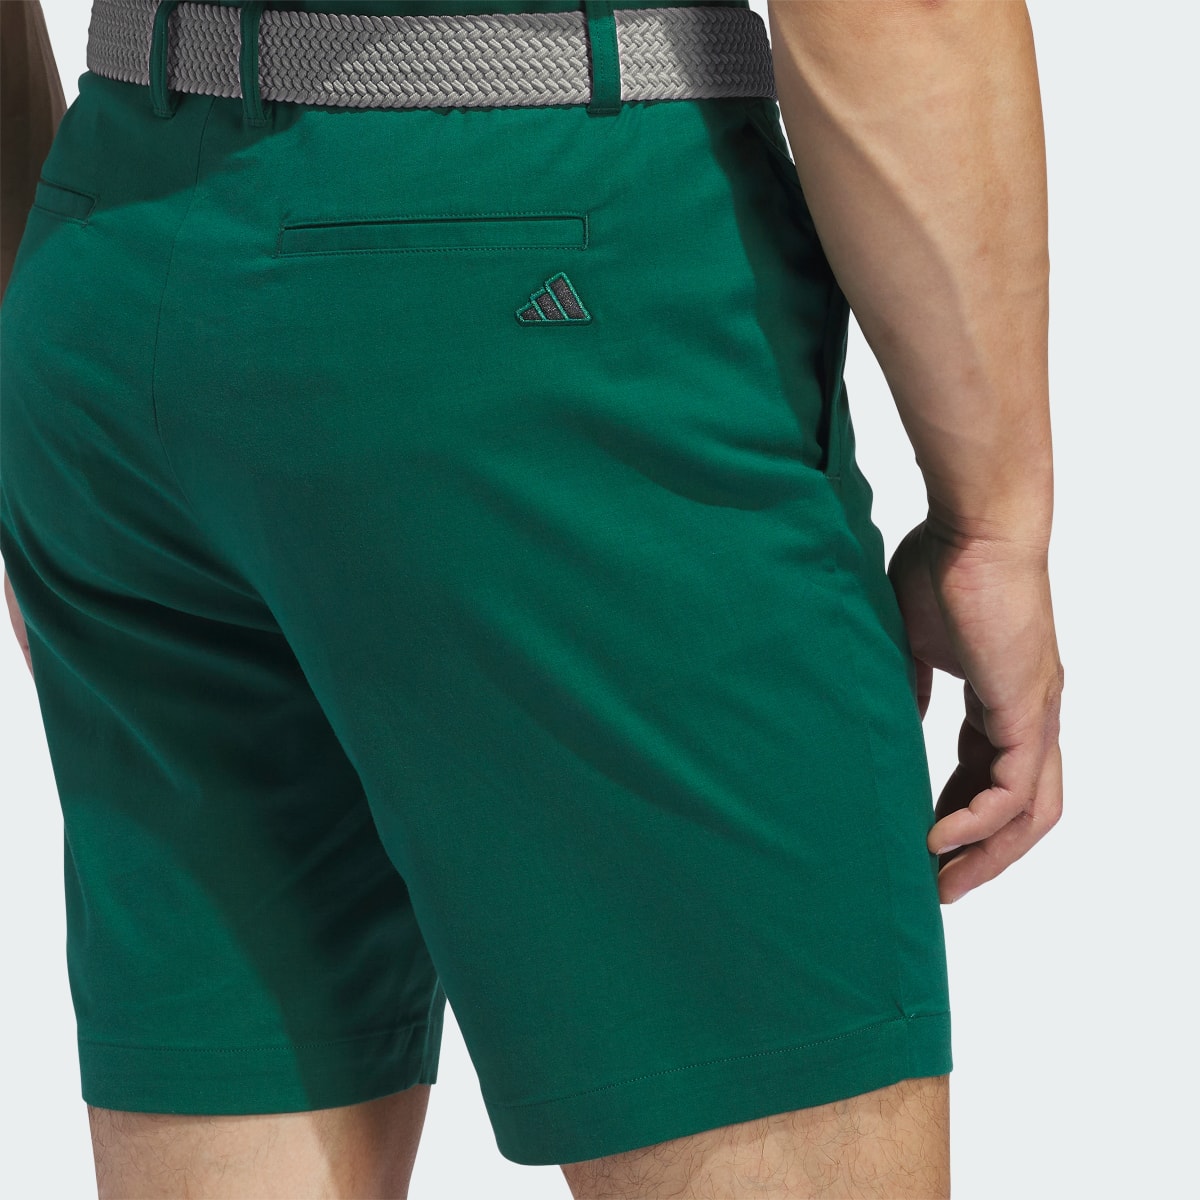 Adidas Go-To Five-Pocket Golf Shorts. 6